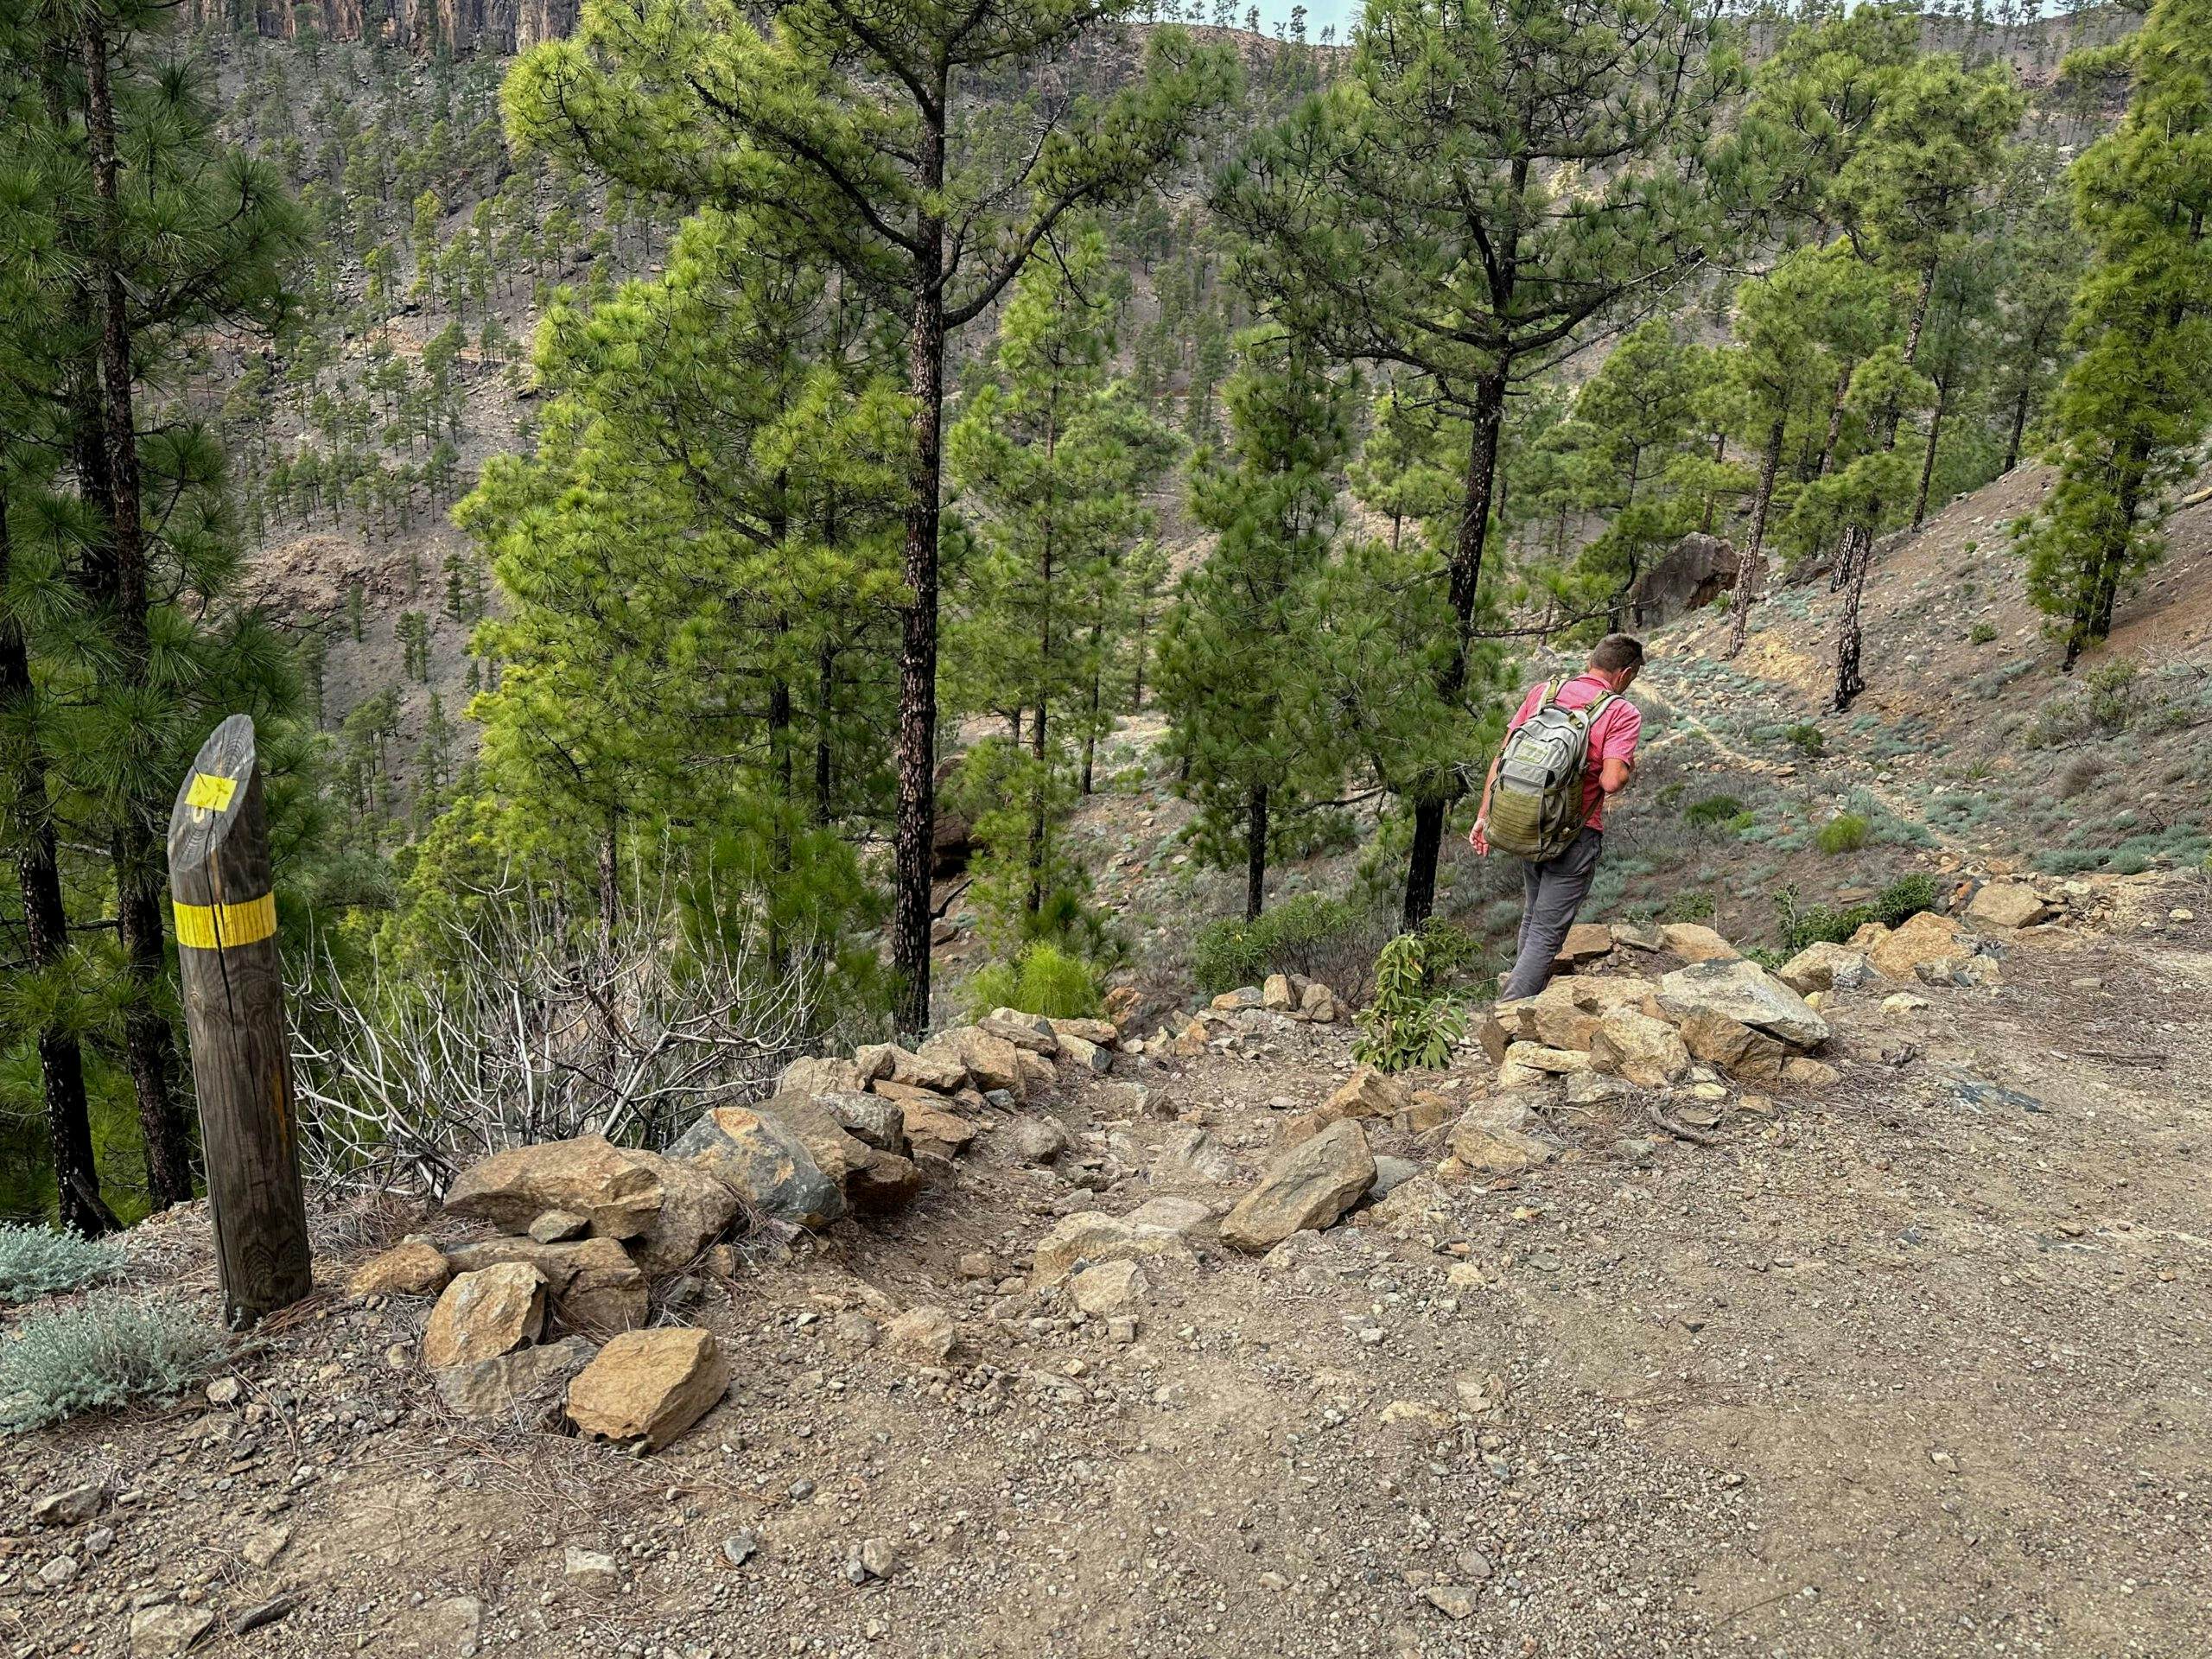 Hikers on the trail below the Morro de las Vacas on the trail through the Barranco de Pilancones